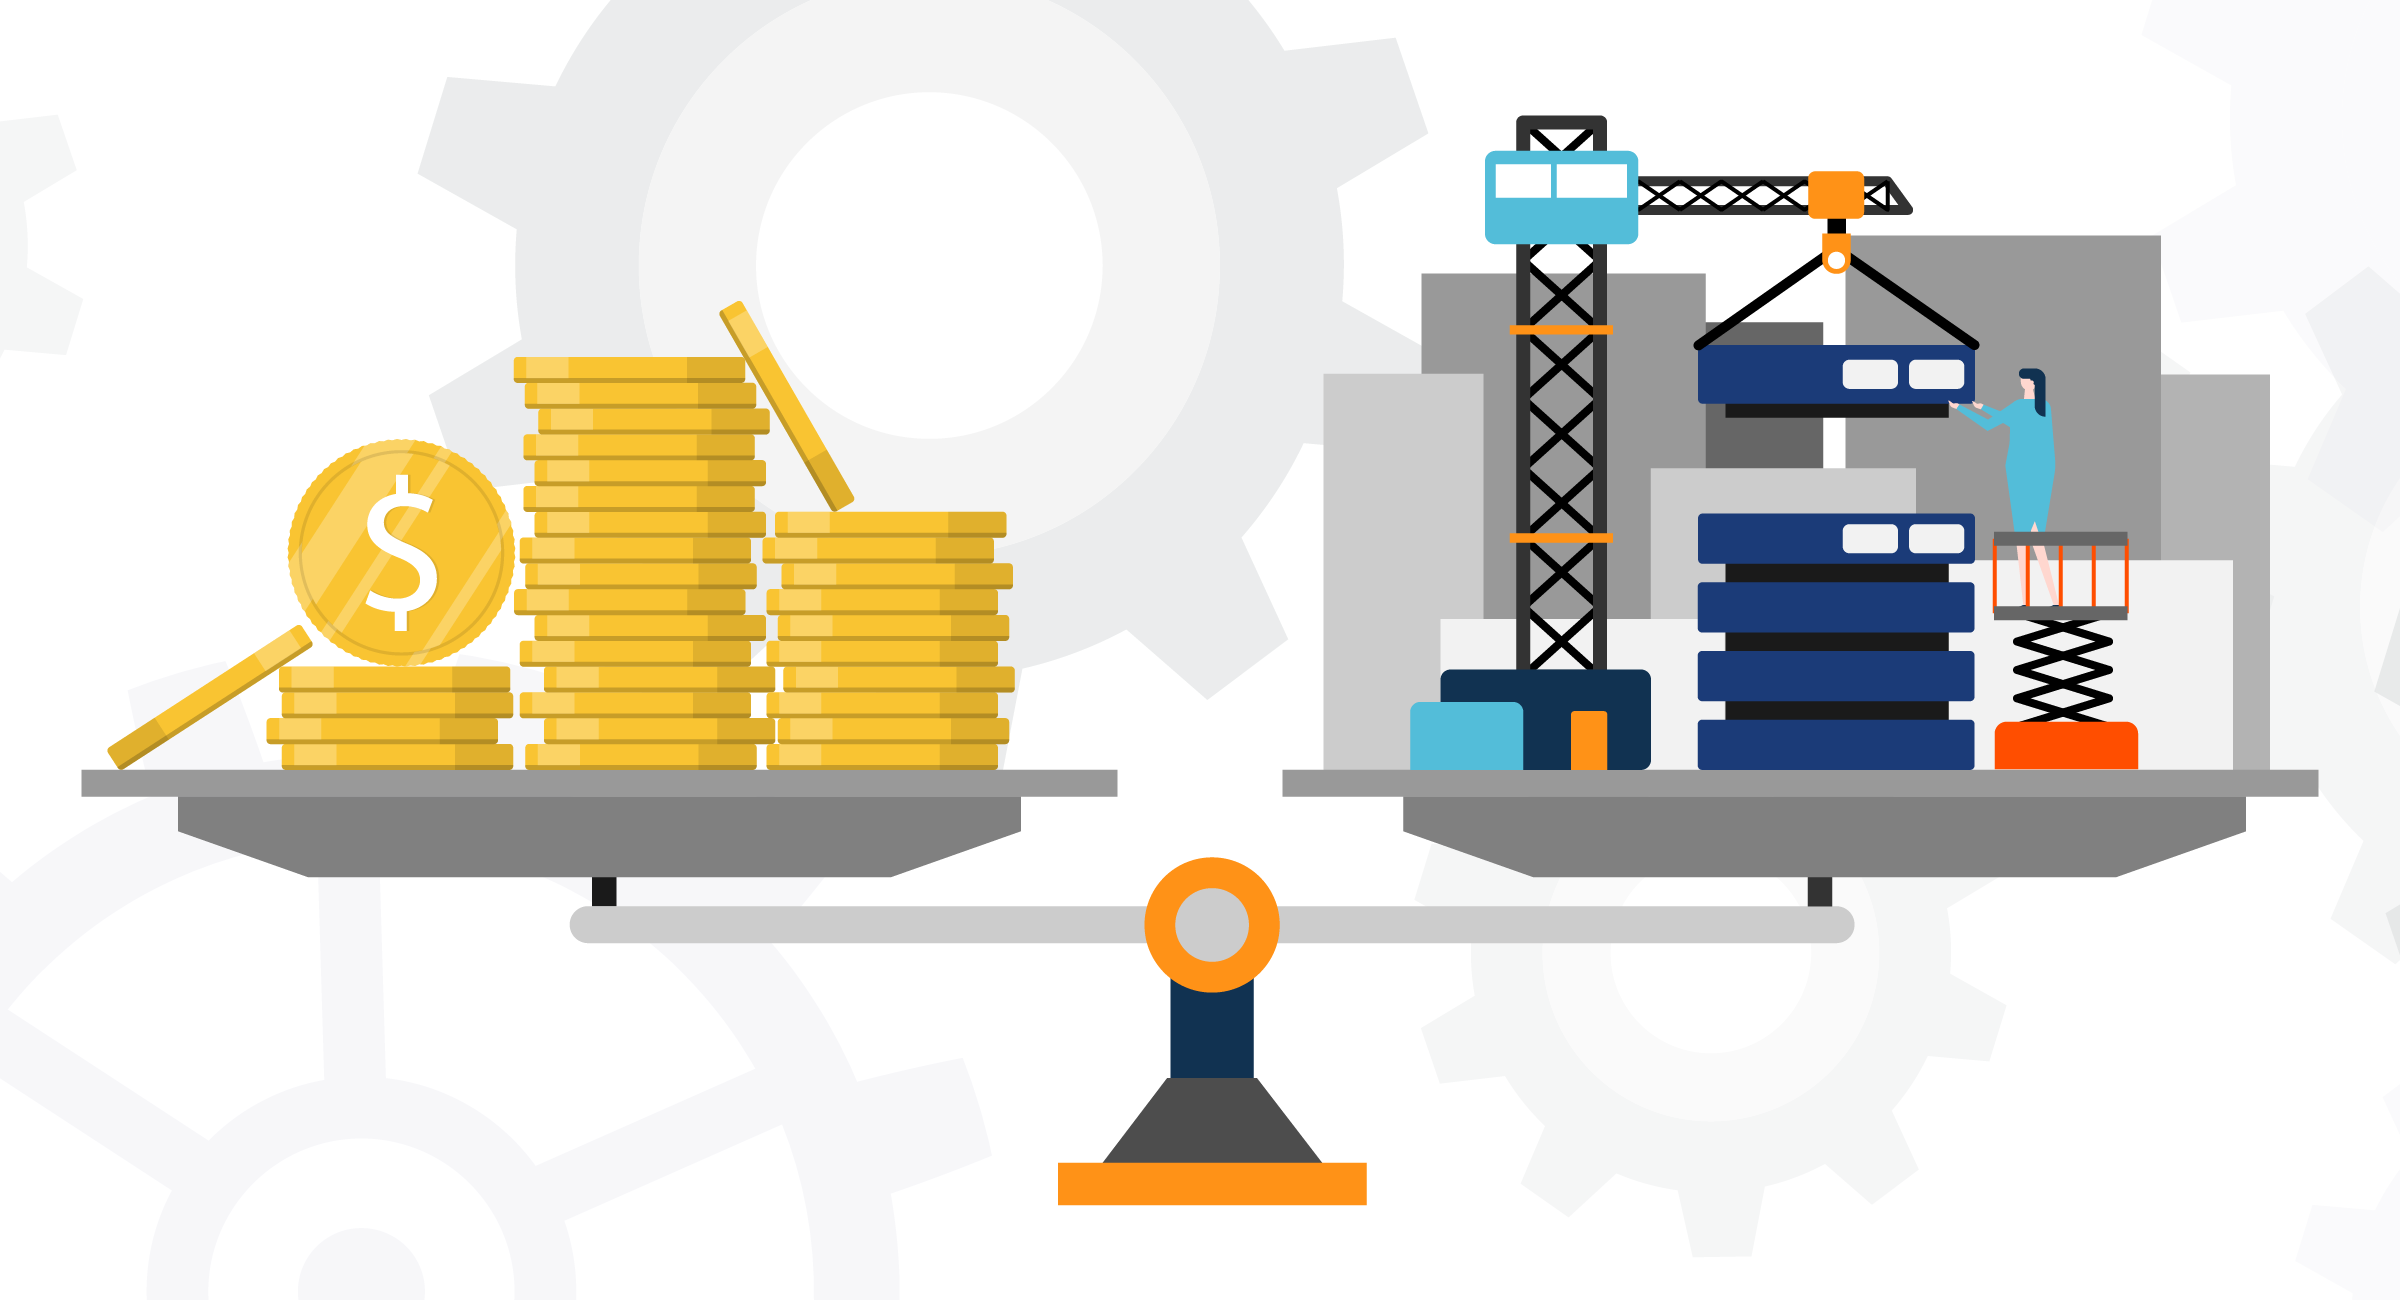 The cost of building an enterprise API analytics platform